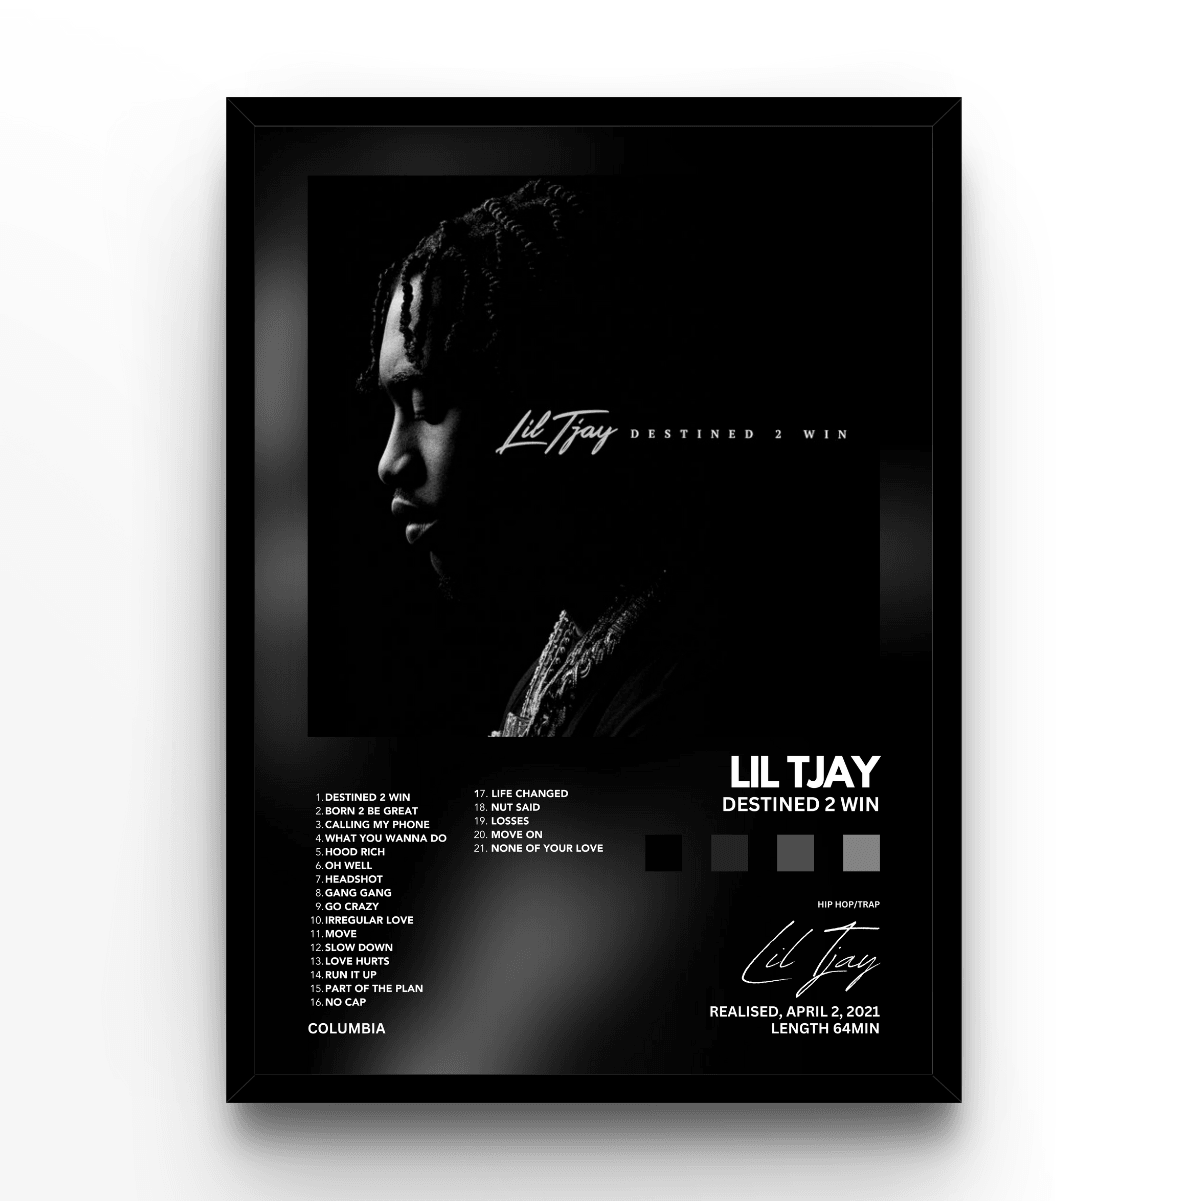 Lil Tjay Destined 2 Win Album - A4, A3, A2 Posters Base - Poster Print Shop / Art Prints / PostersBase